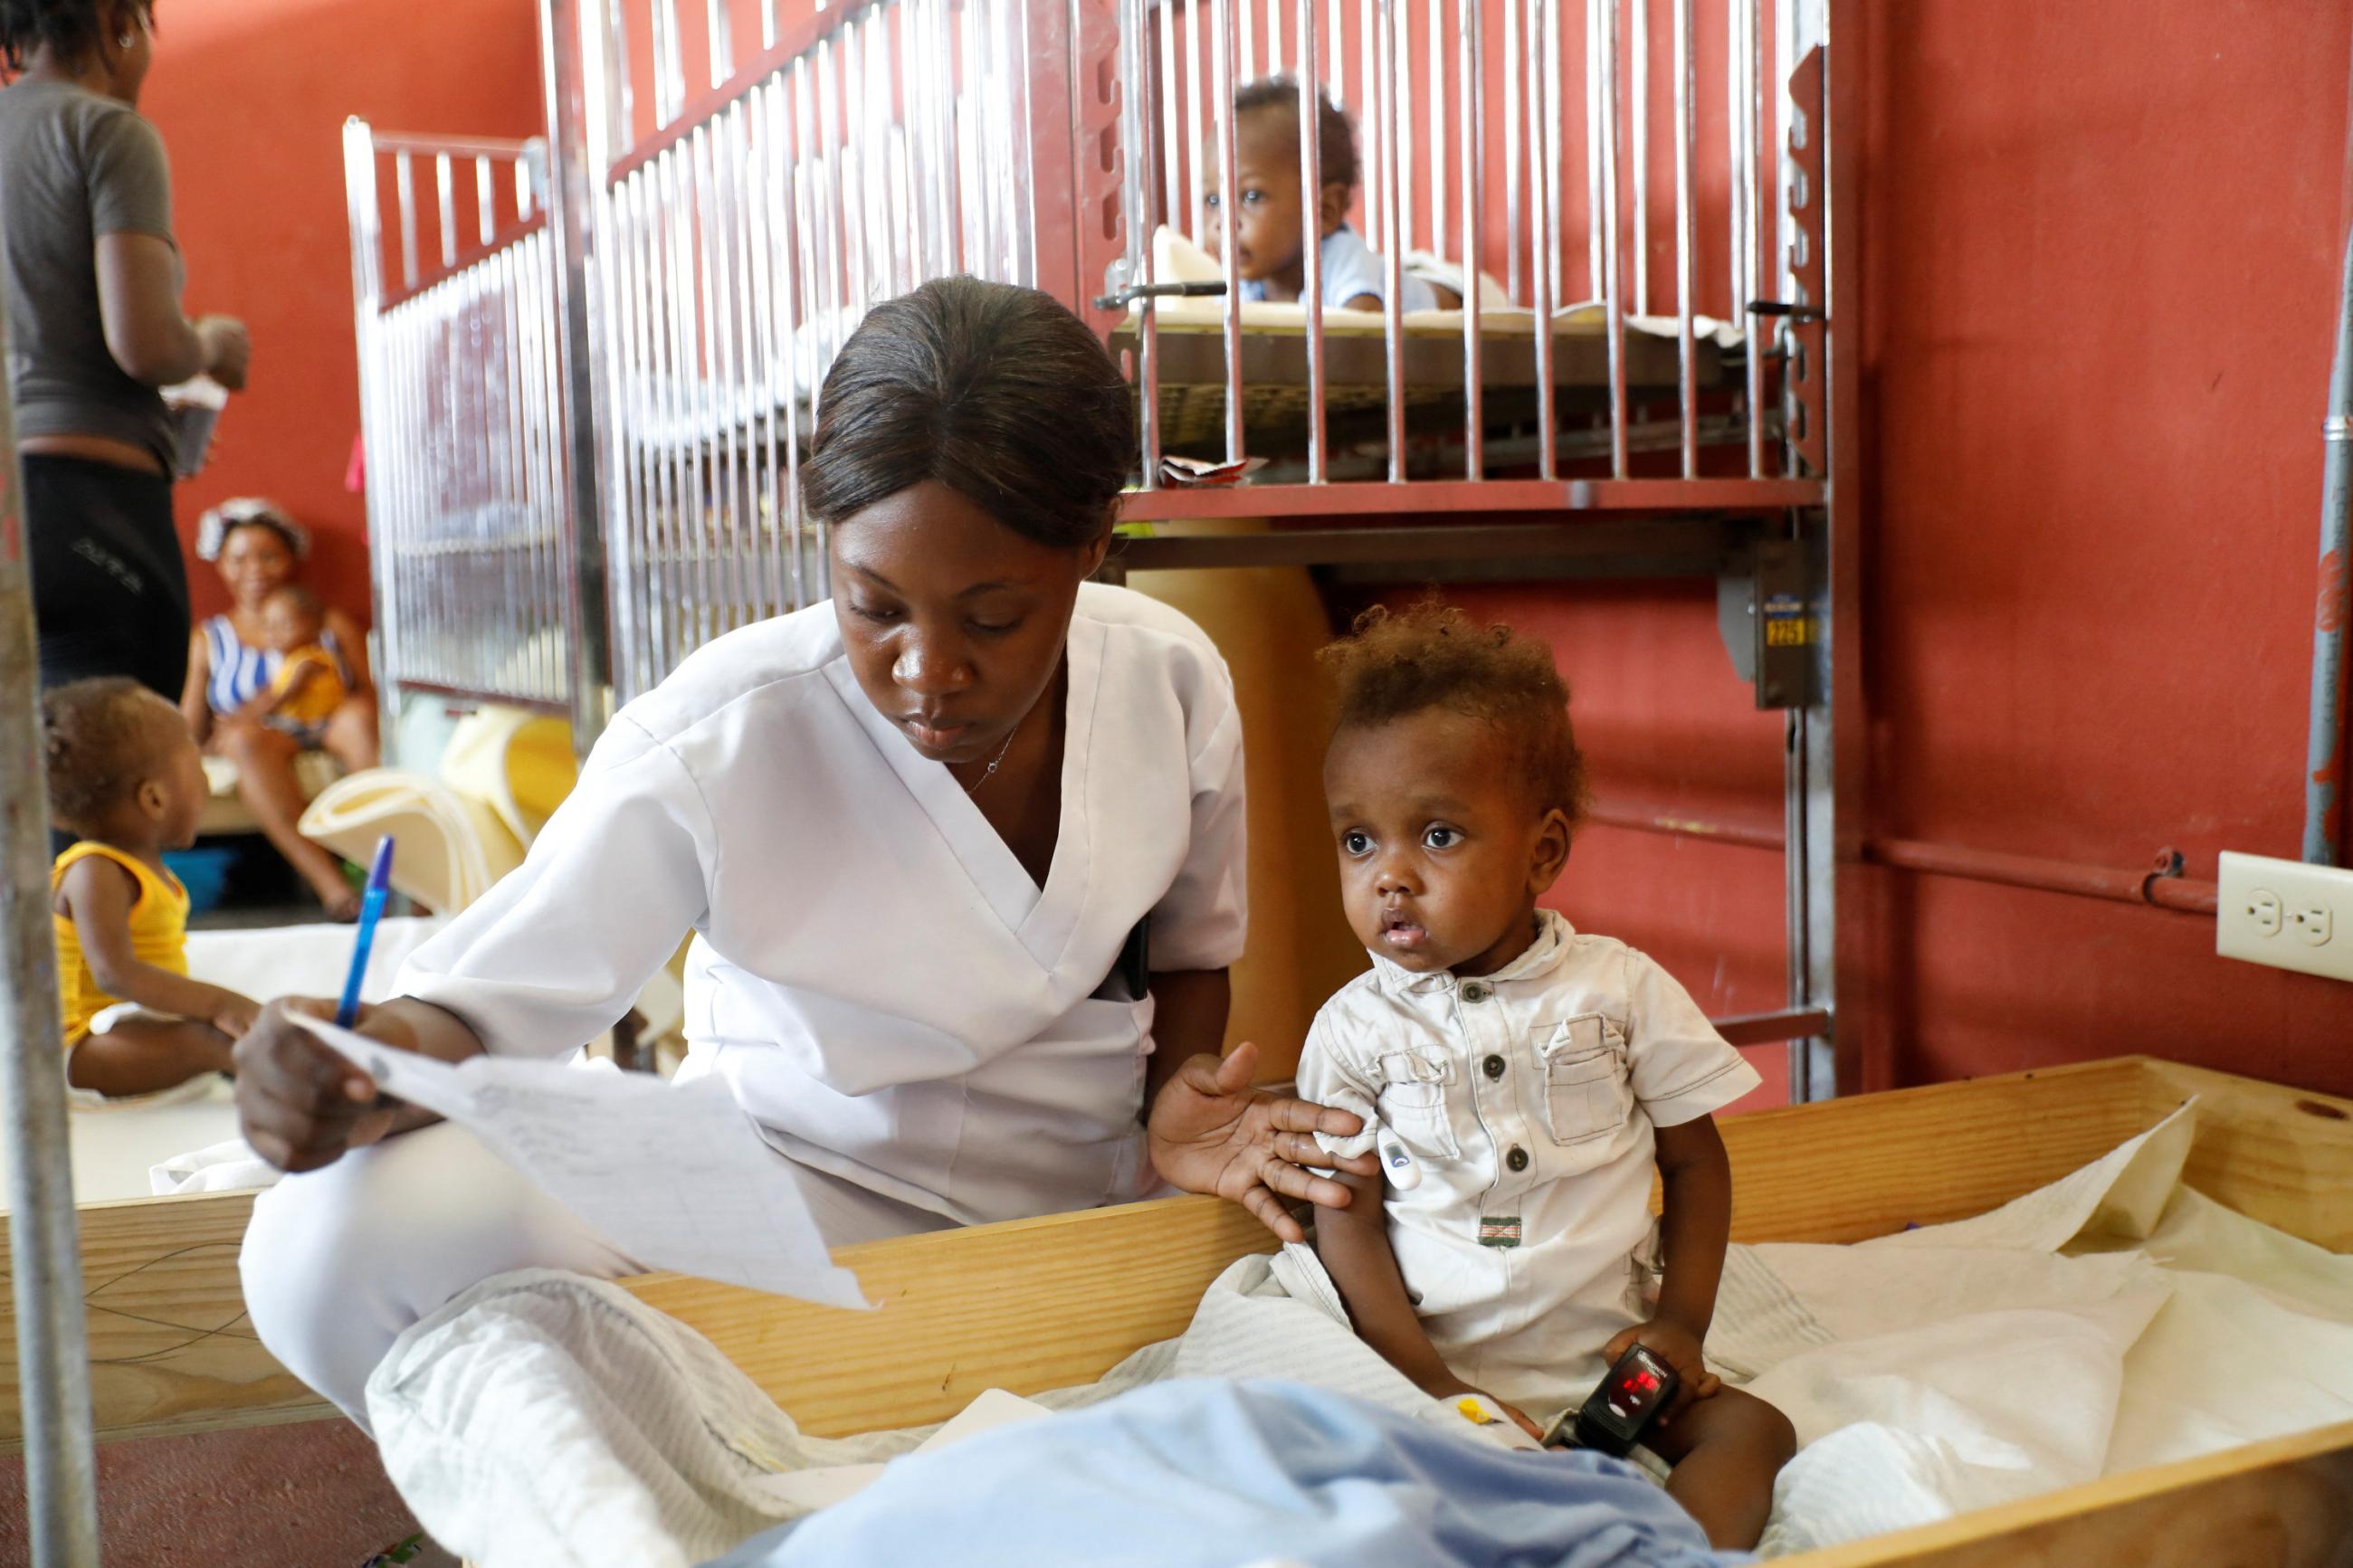 A registered nurse cares for an infant at the Centre Hospitalier de Fontaine.